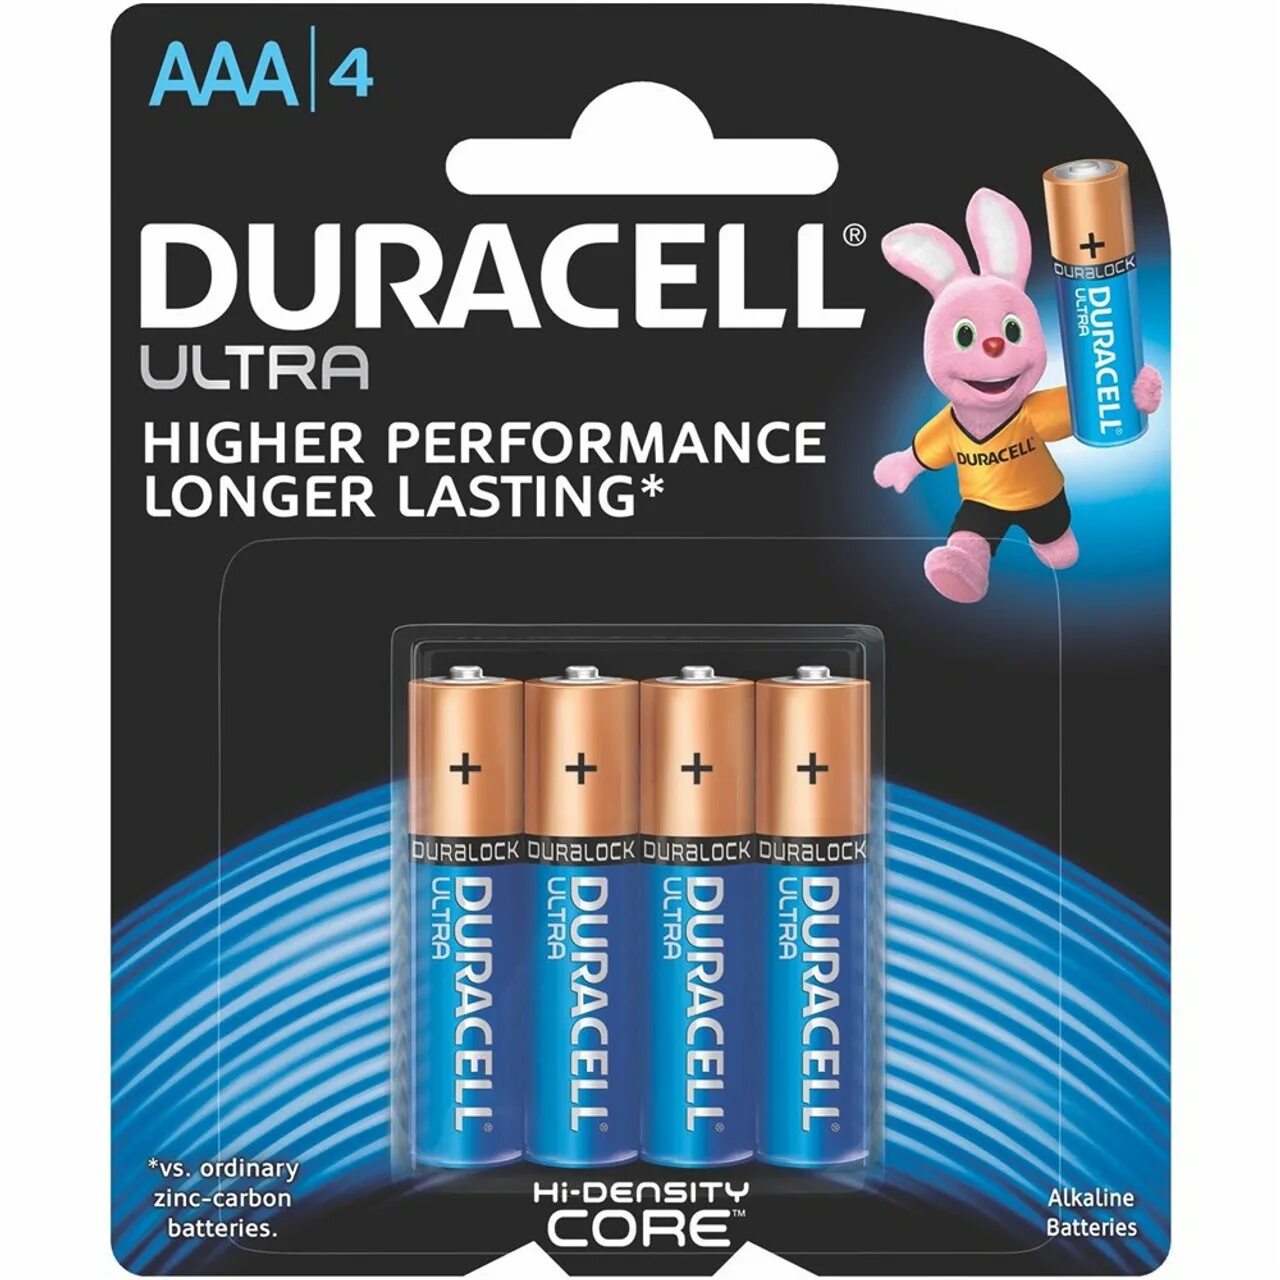 Дюрасел ультра 4. Duracell Ultra AAA. Duracell ААА 4 Dual Rock. Duracell Ultra our longest lasting Battery.